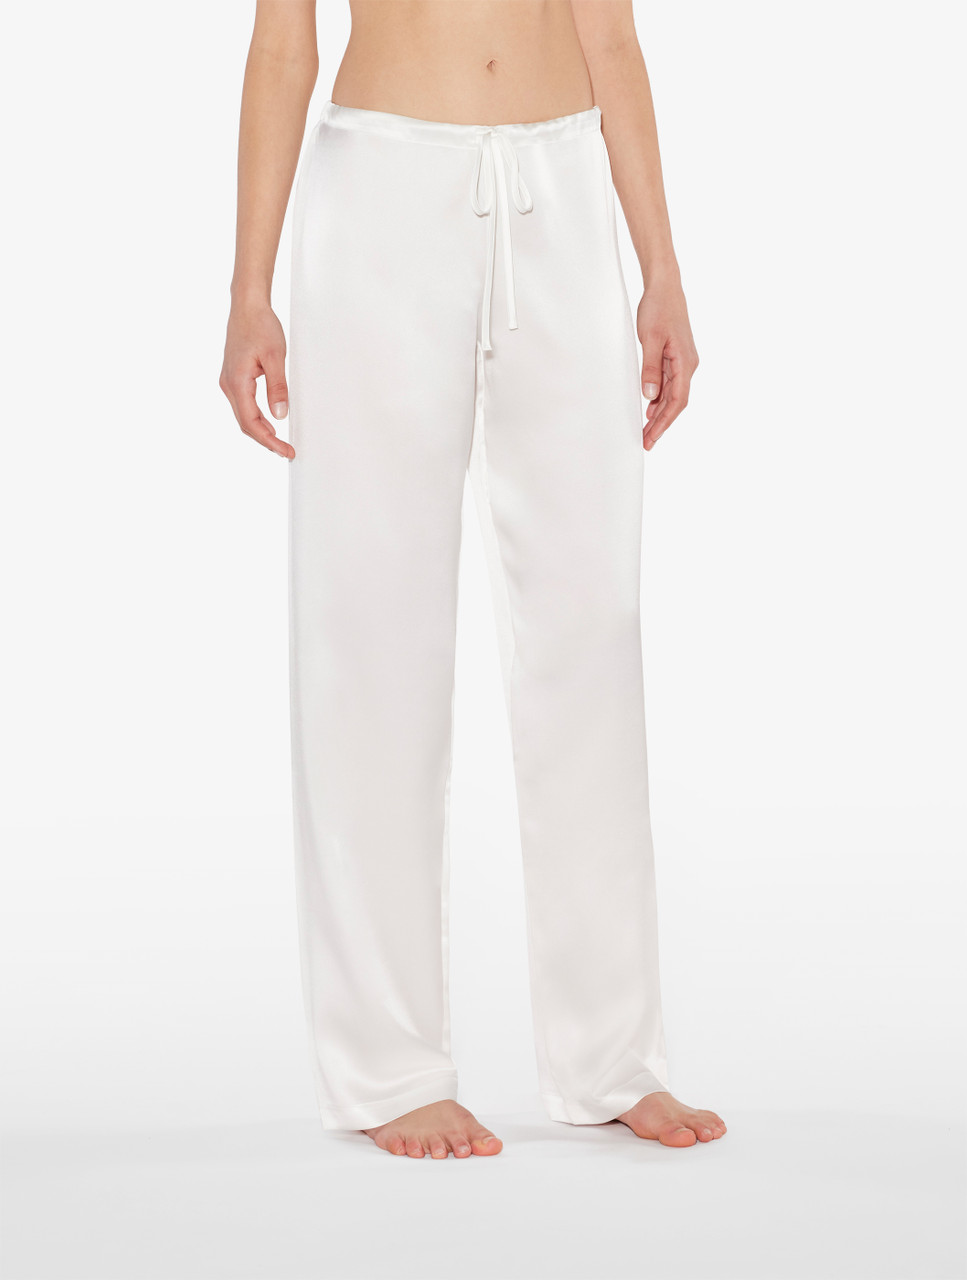 Buy iYunyi Mens Loose Lounge Pants Sleep Trousers Bottoms Homewear Yoga Pants  Pajama White US SAsian M at Amazonin